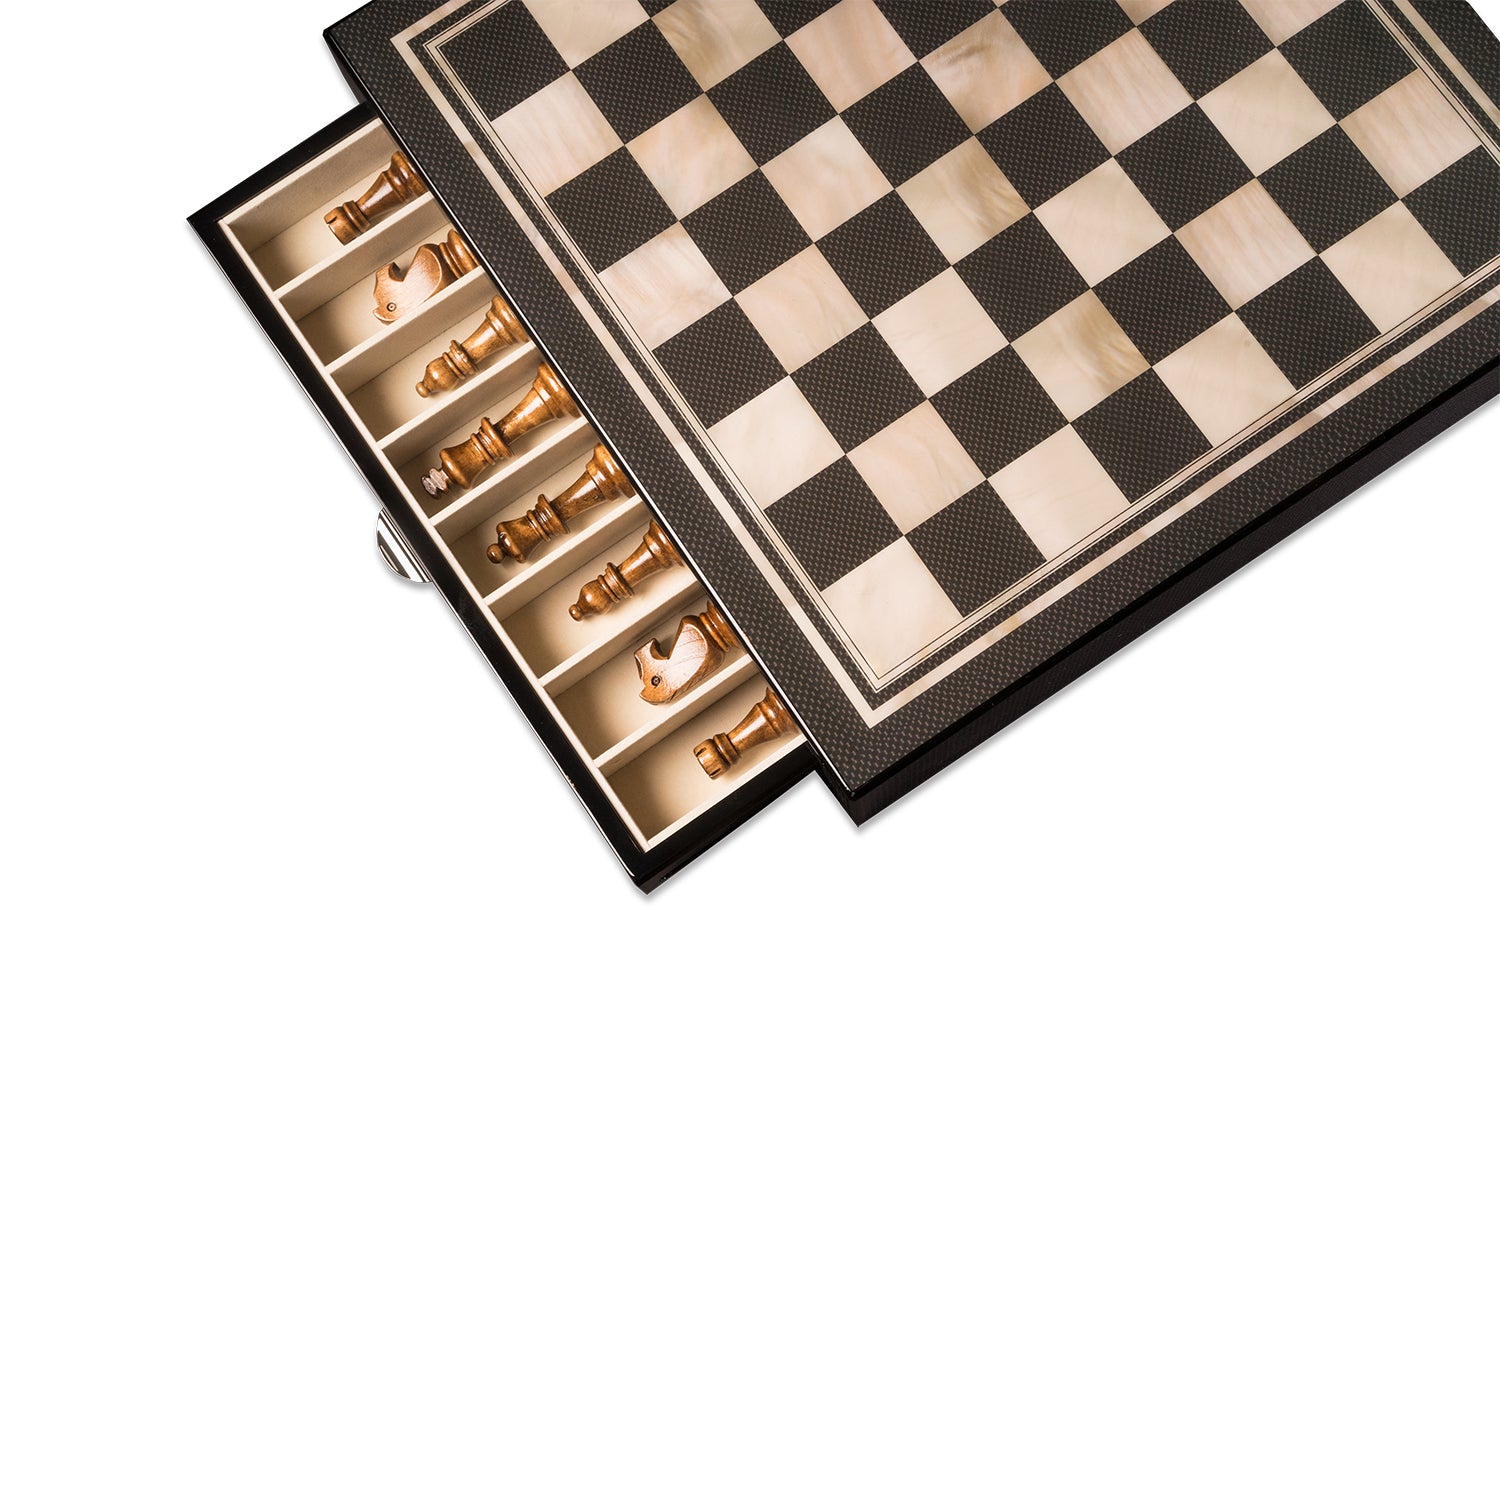 Bey-Berk Nolan Carbon Fiber & Mother of Pearl Design Chess Set